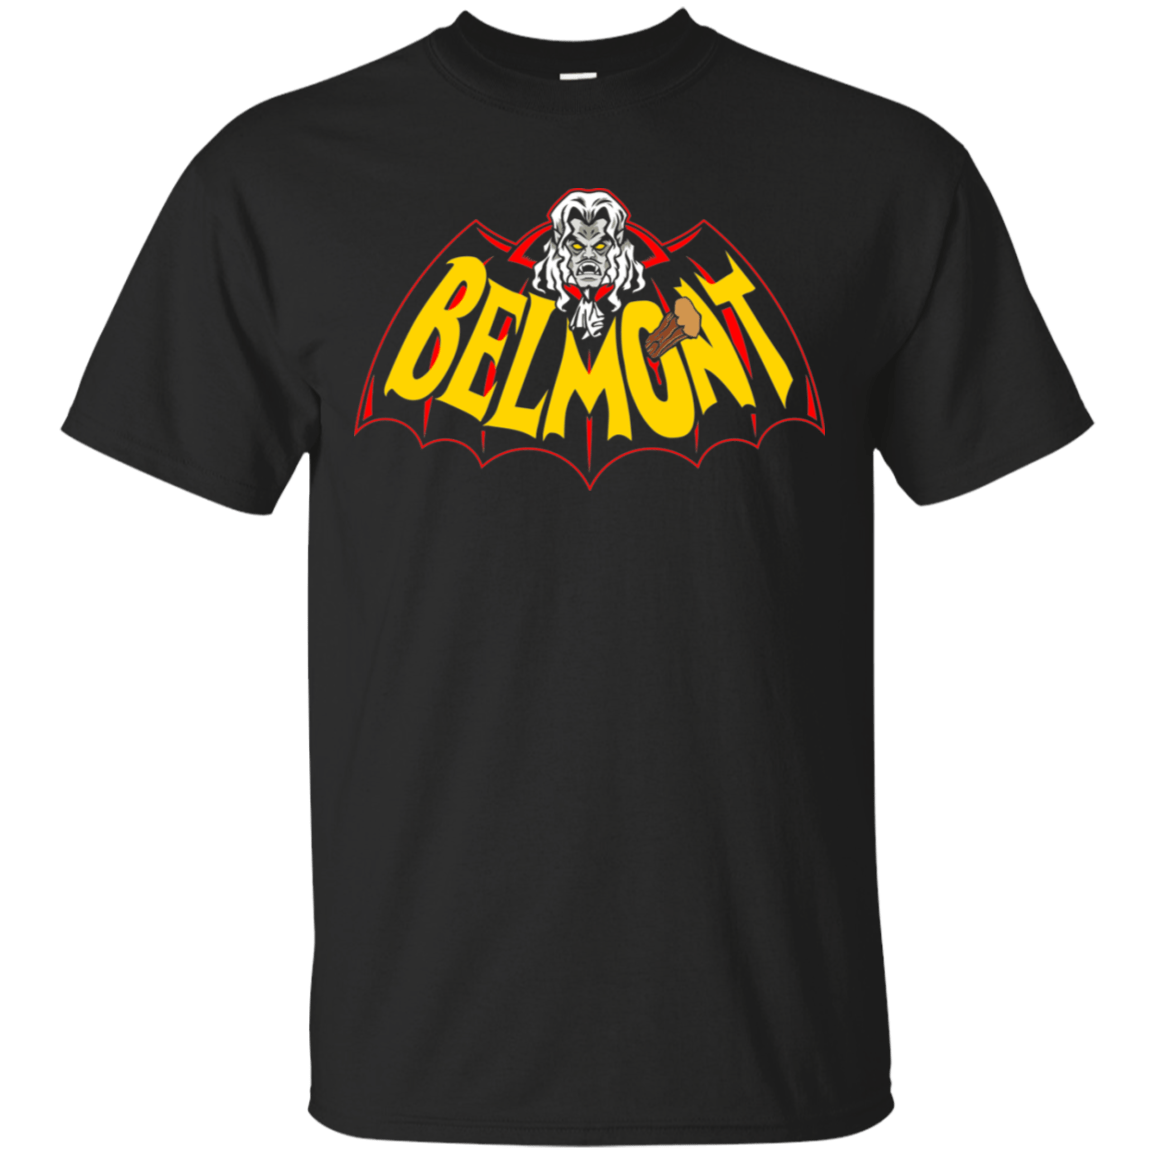 T-Shirts Black / S Belmont T-Shirt